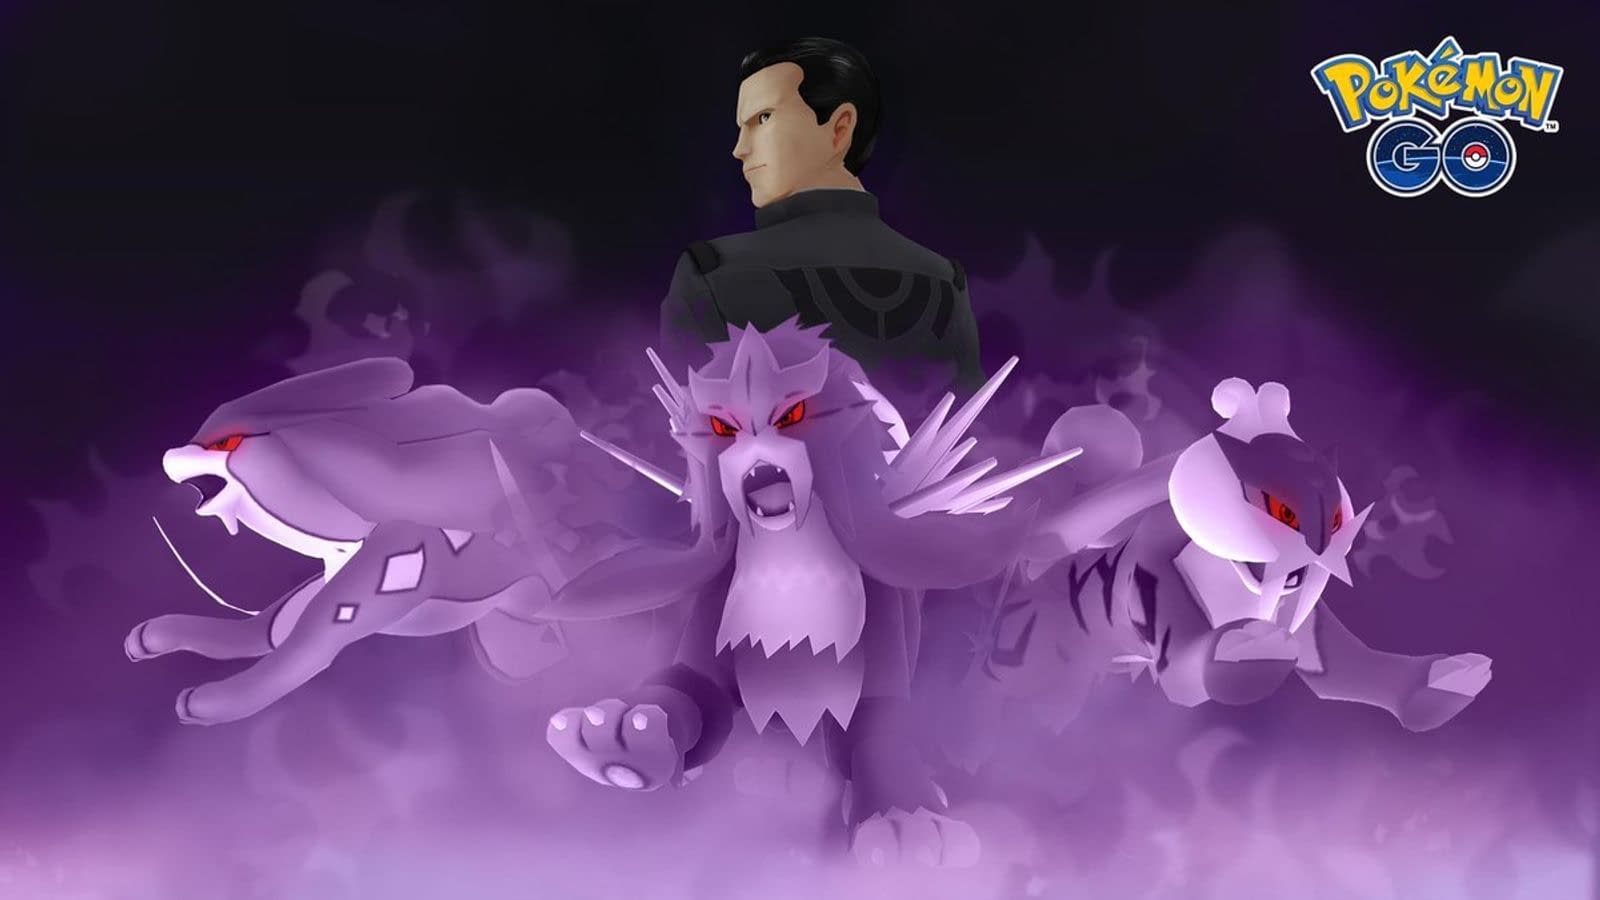 Pokémon Go: Forget Frustration on these Shadow Pokémon first